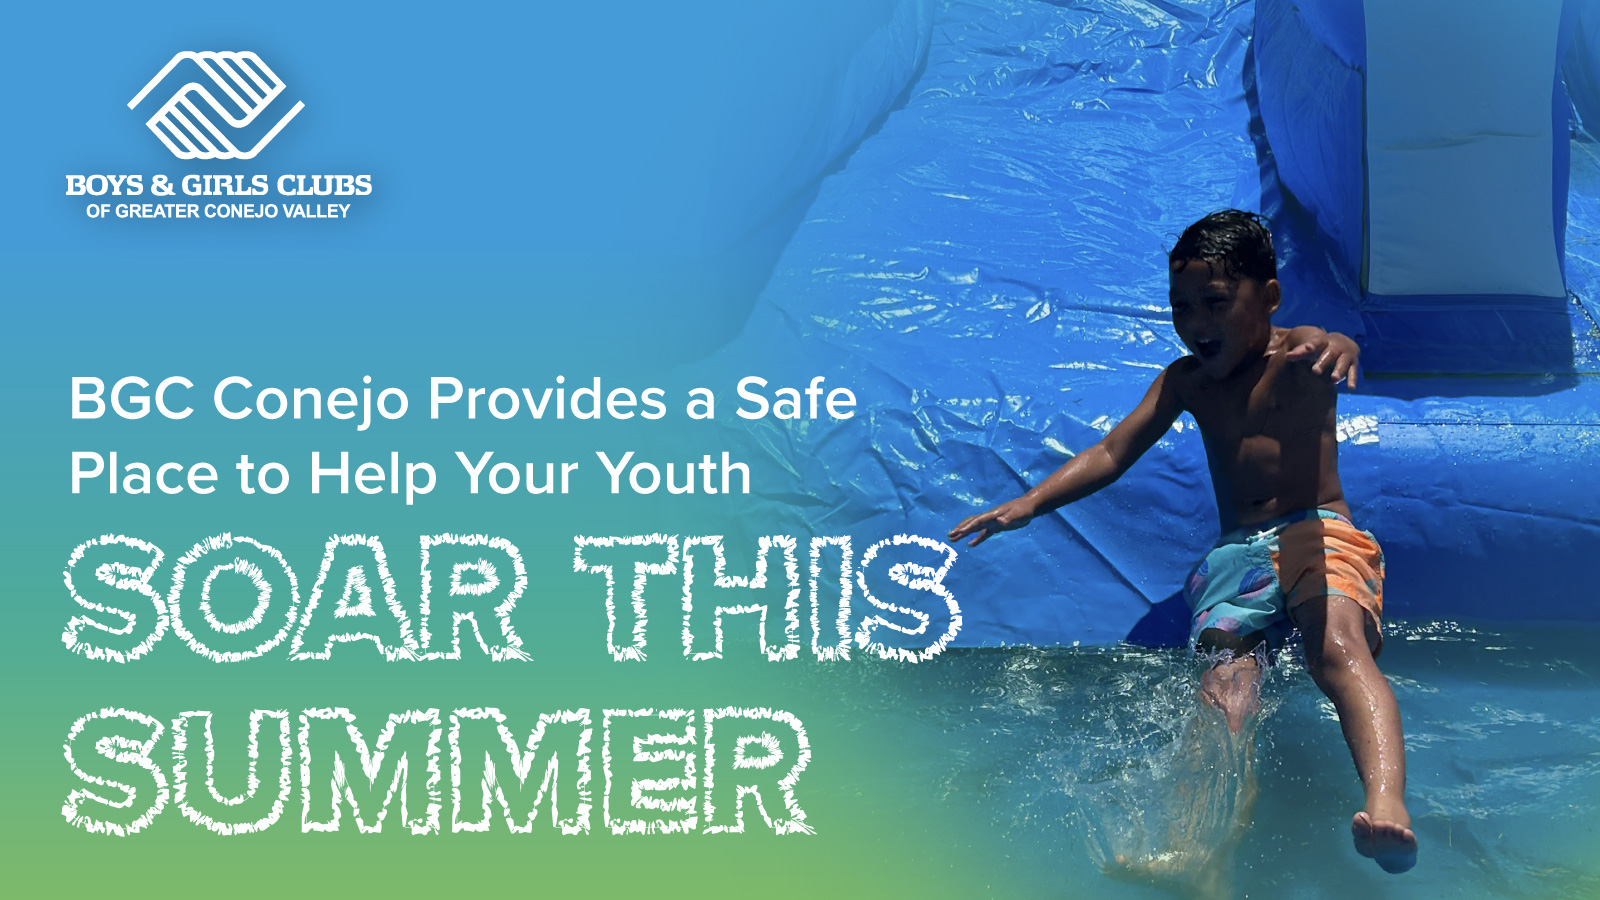 Soar This Summer - Youth Summer Camp at BGC Conejo!